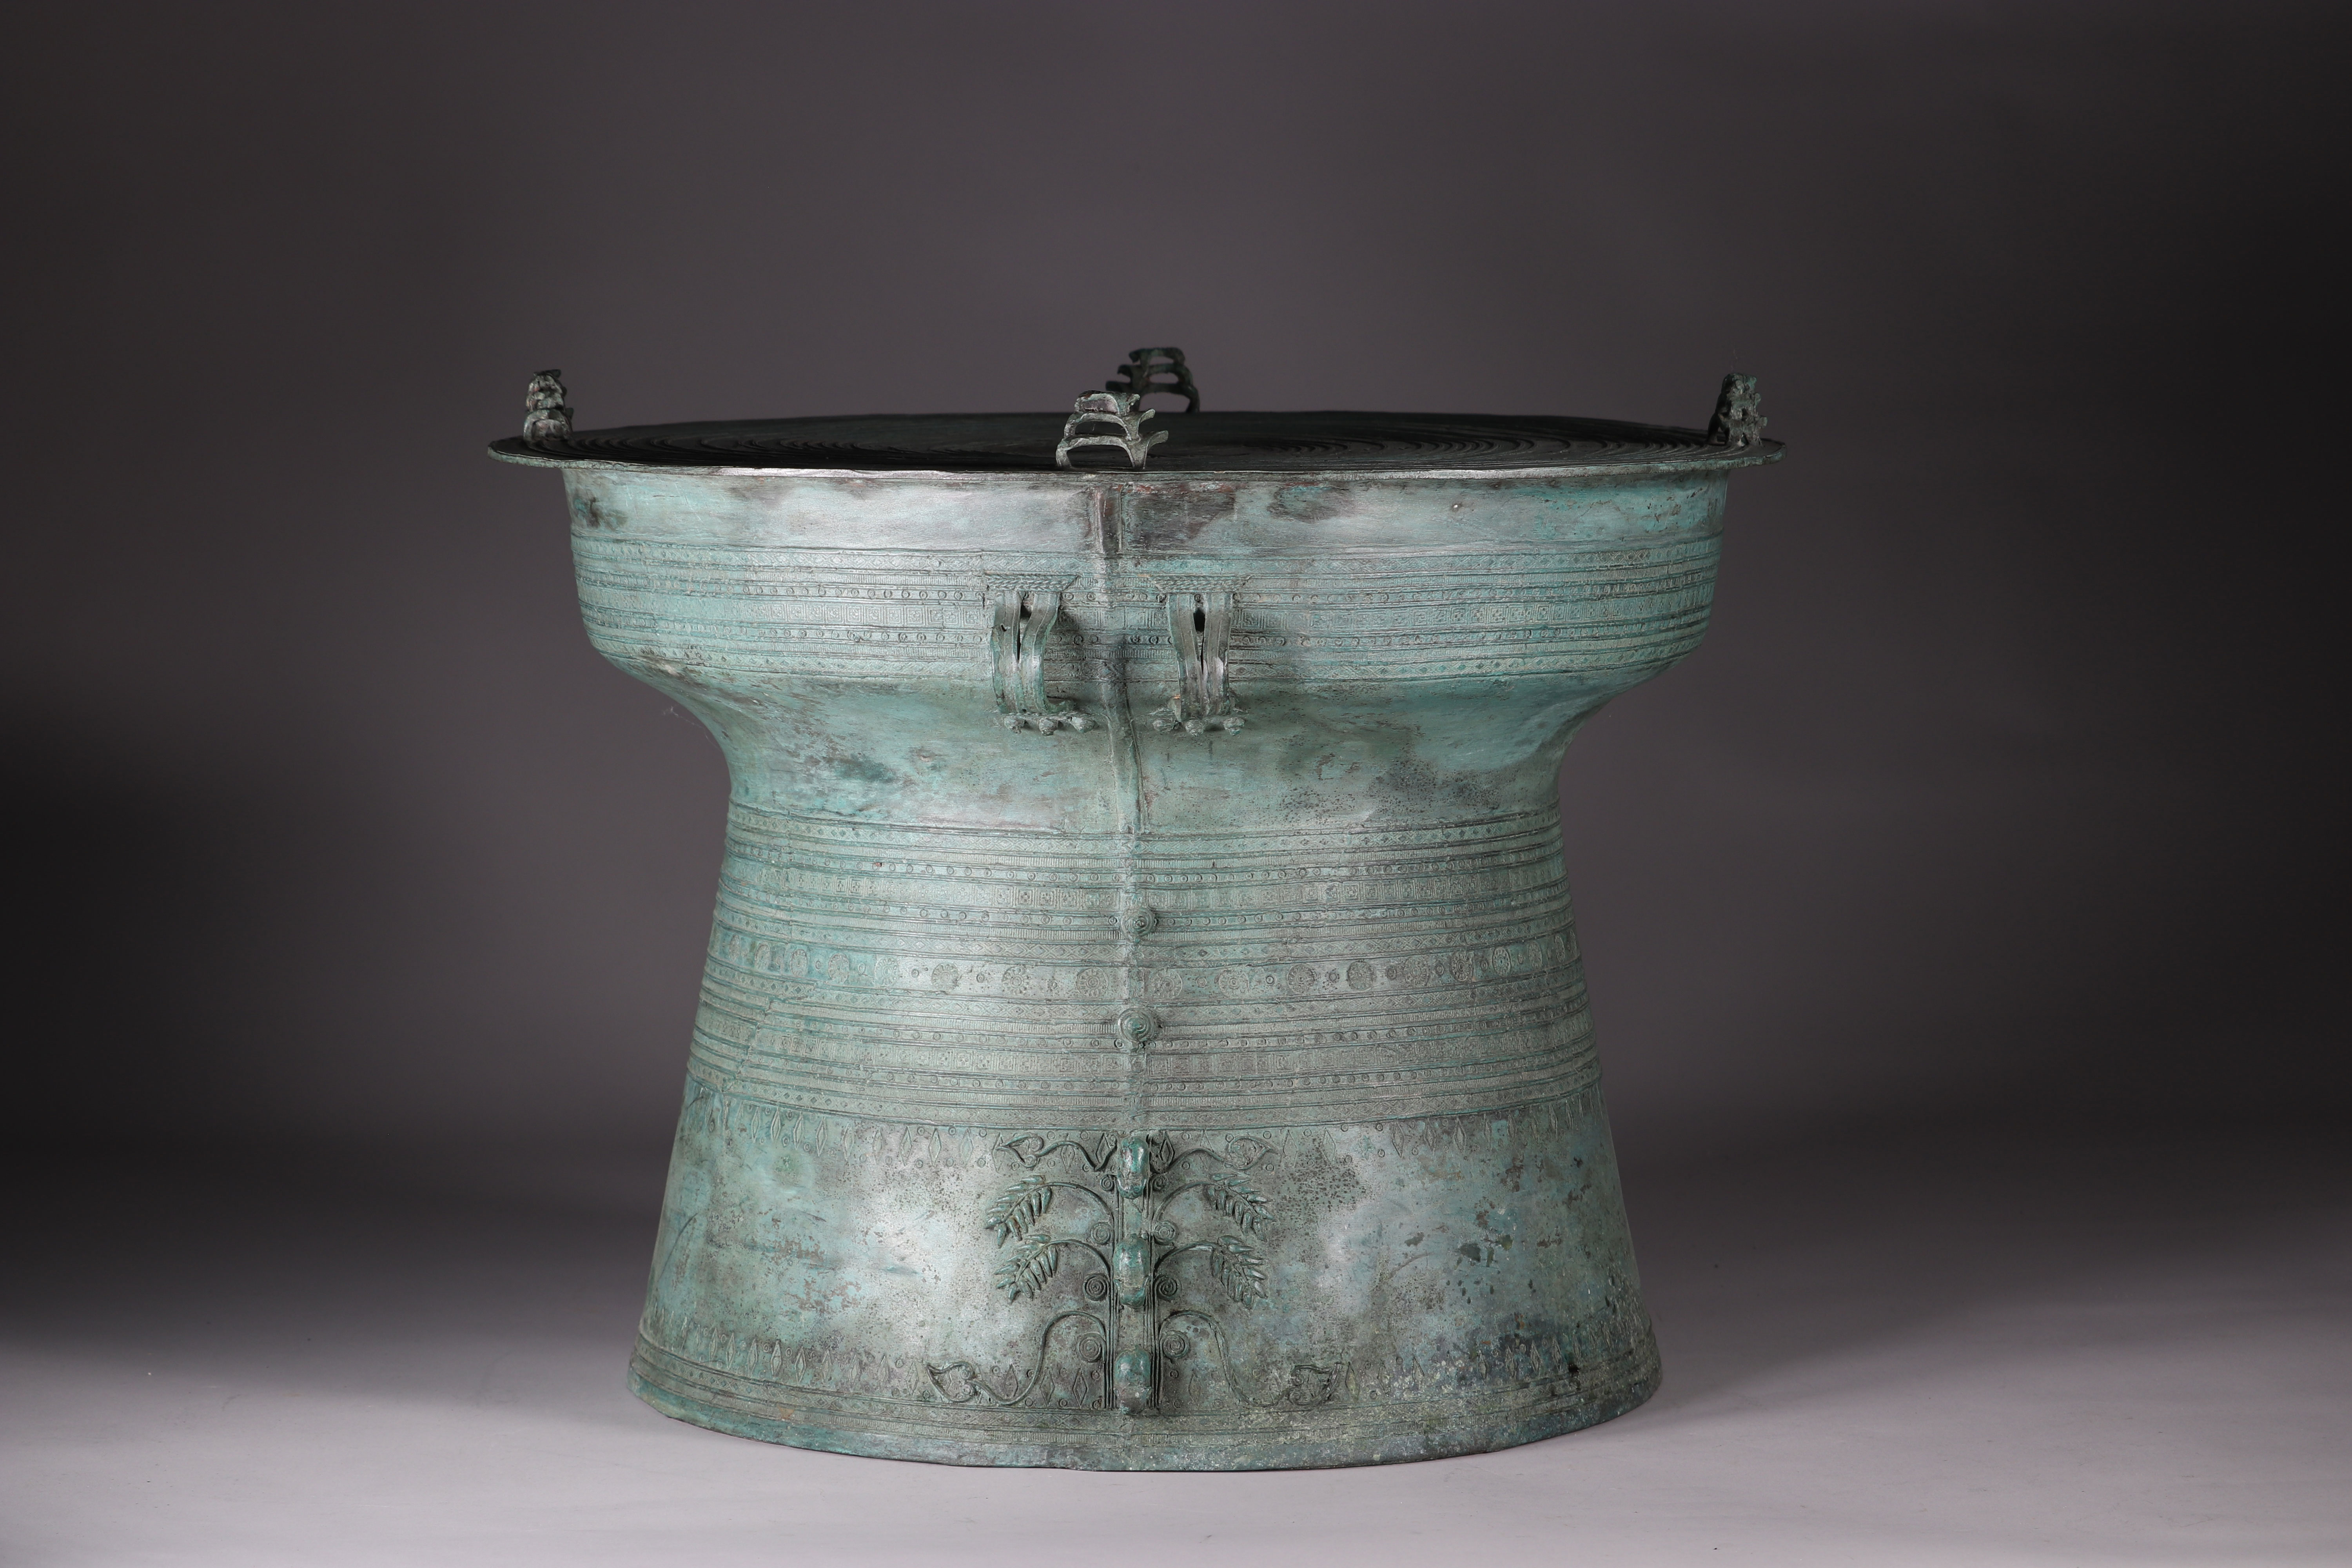 Vietnam ritual object known as bronze rain drum - Image 2 of 3